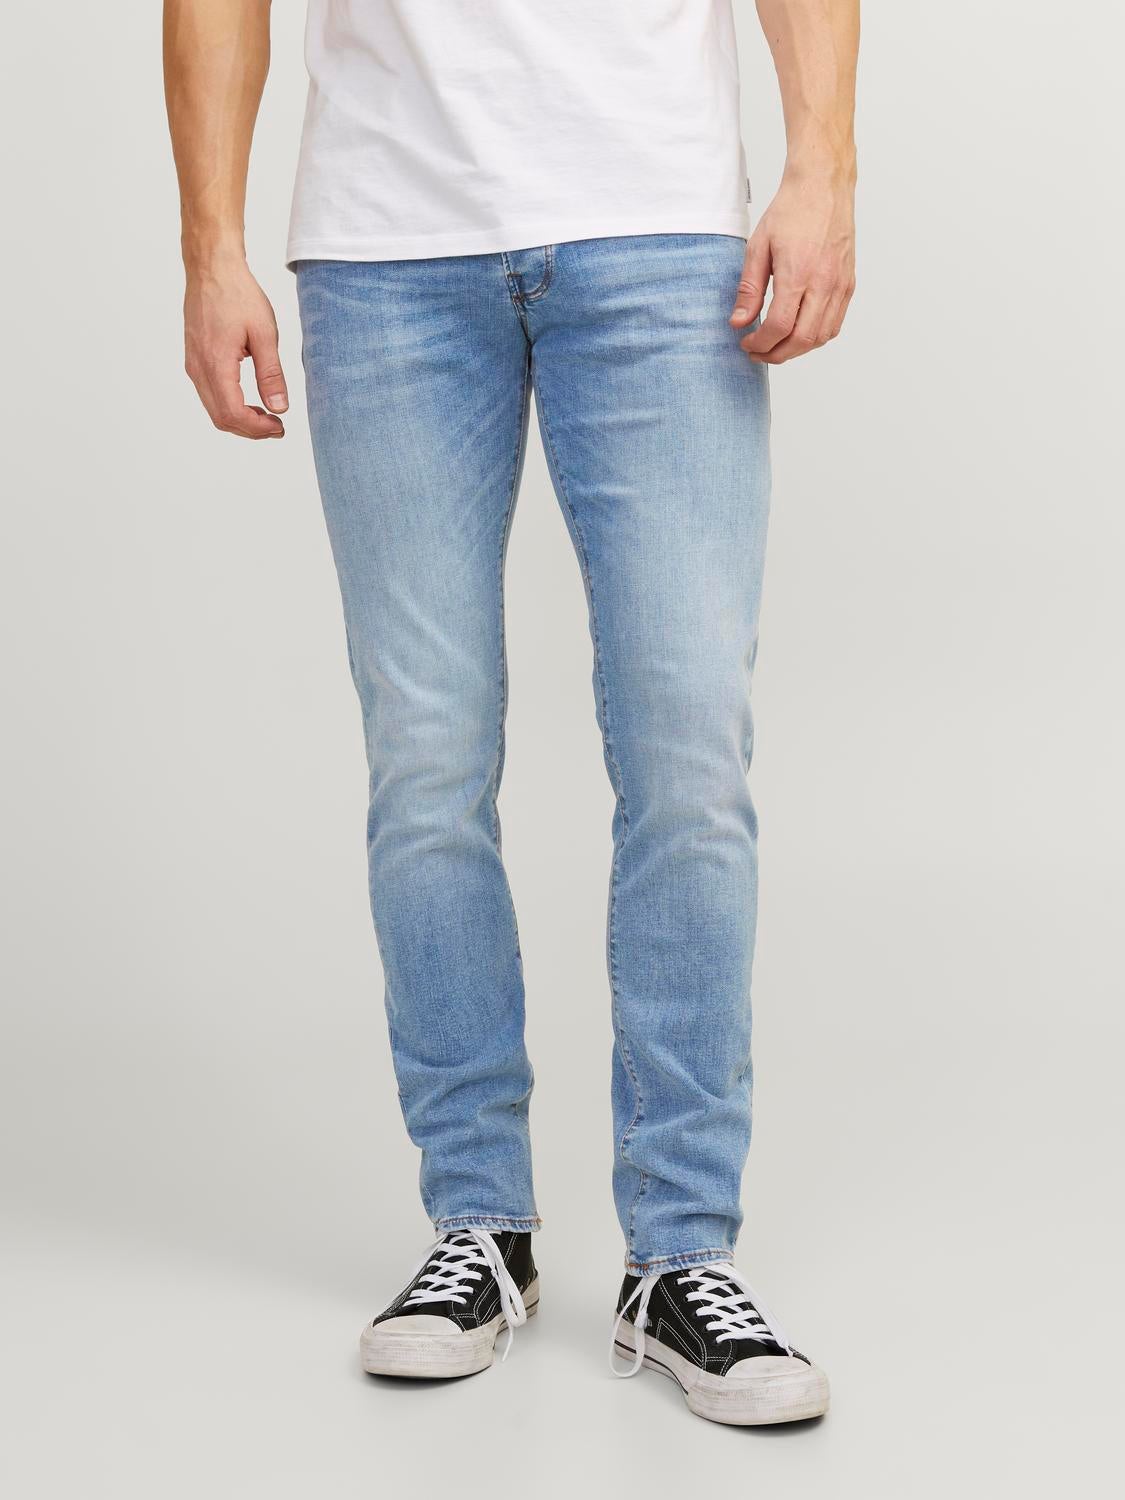 Jeans & Trousers | ORIGINALS BY JACK & JONES LADIES JEANS | Freeup